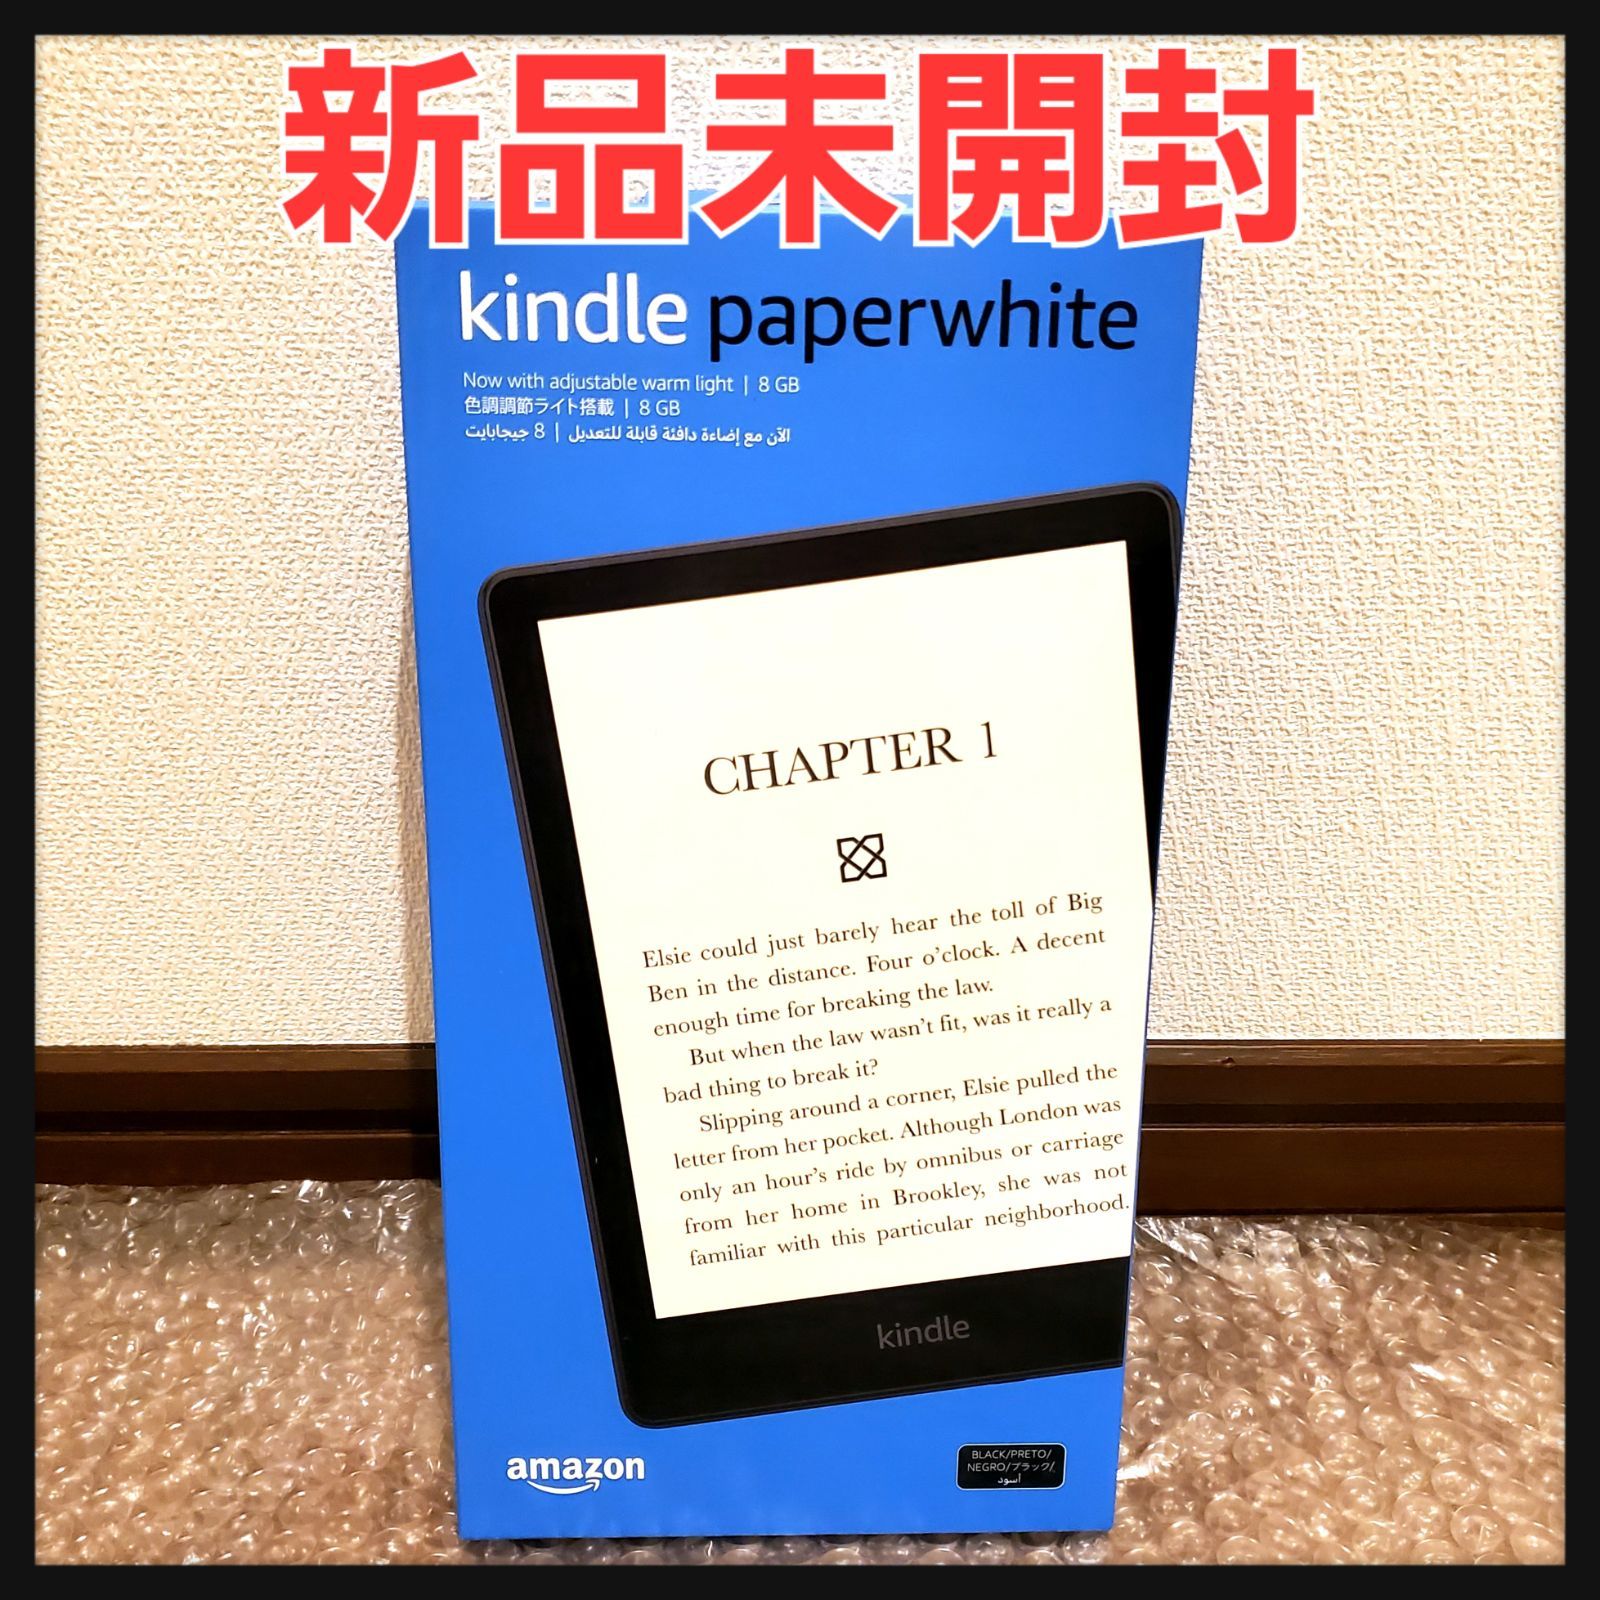 新品未開封 Kindle Paperwhite 8GB